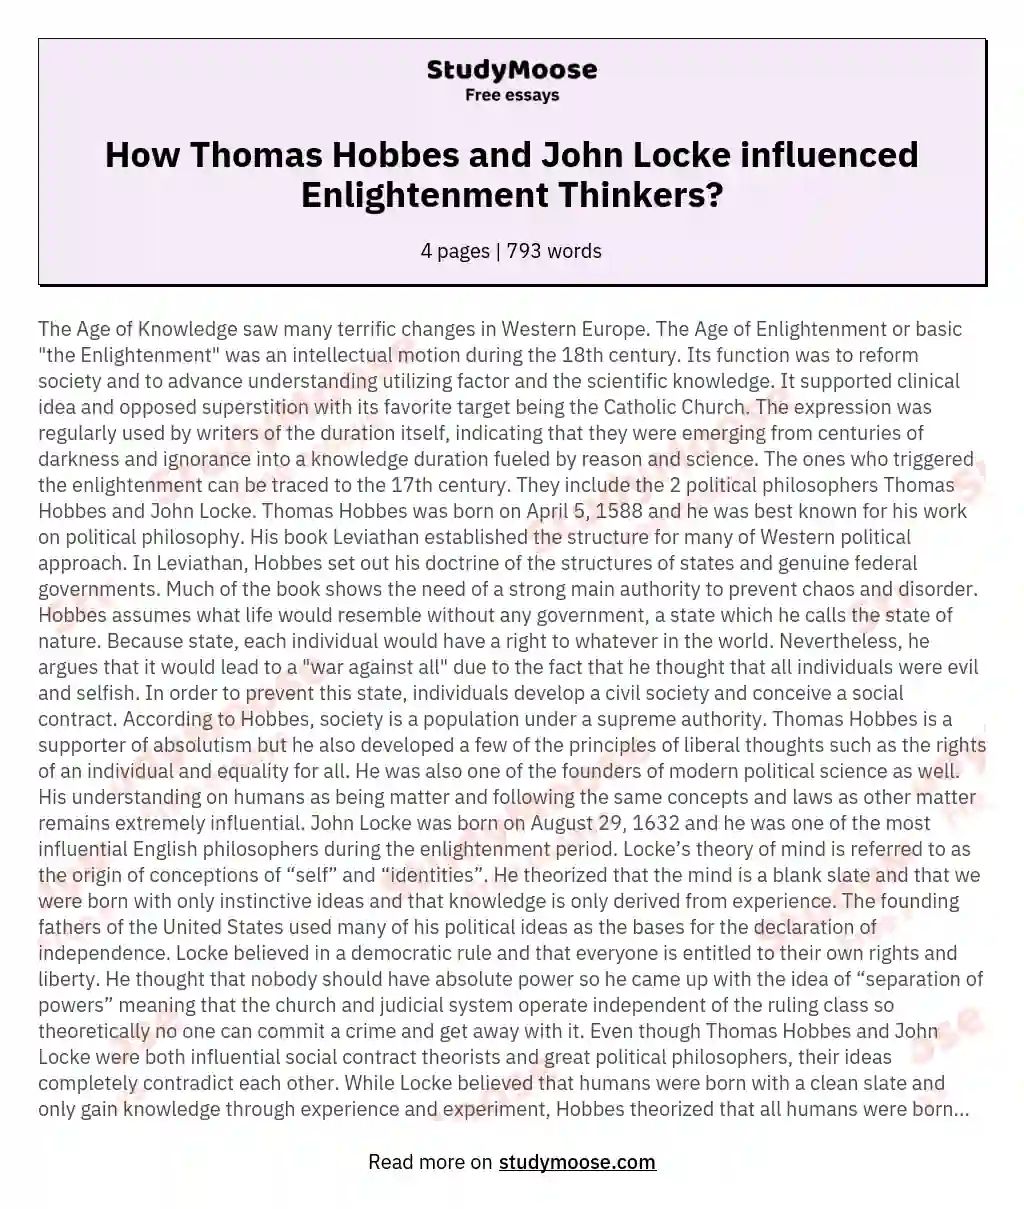 How Thomas Hobbes and John Locke influenced Enlightenment Thinkers? essay